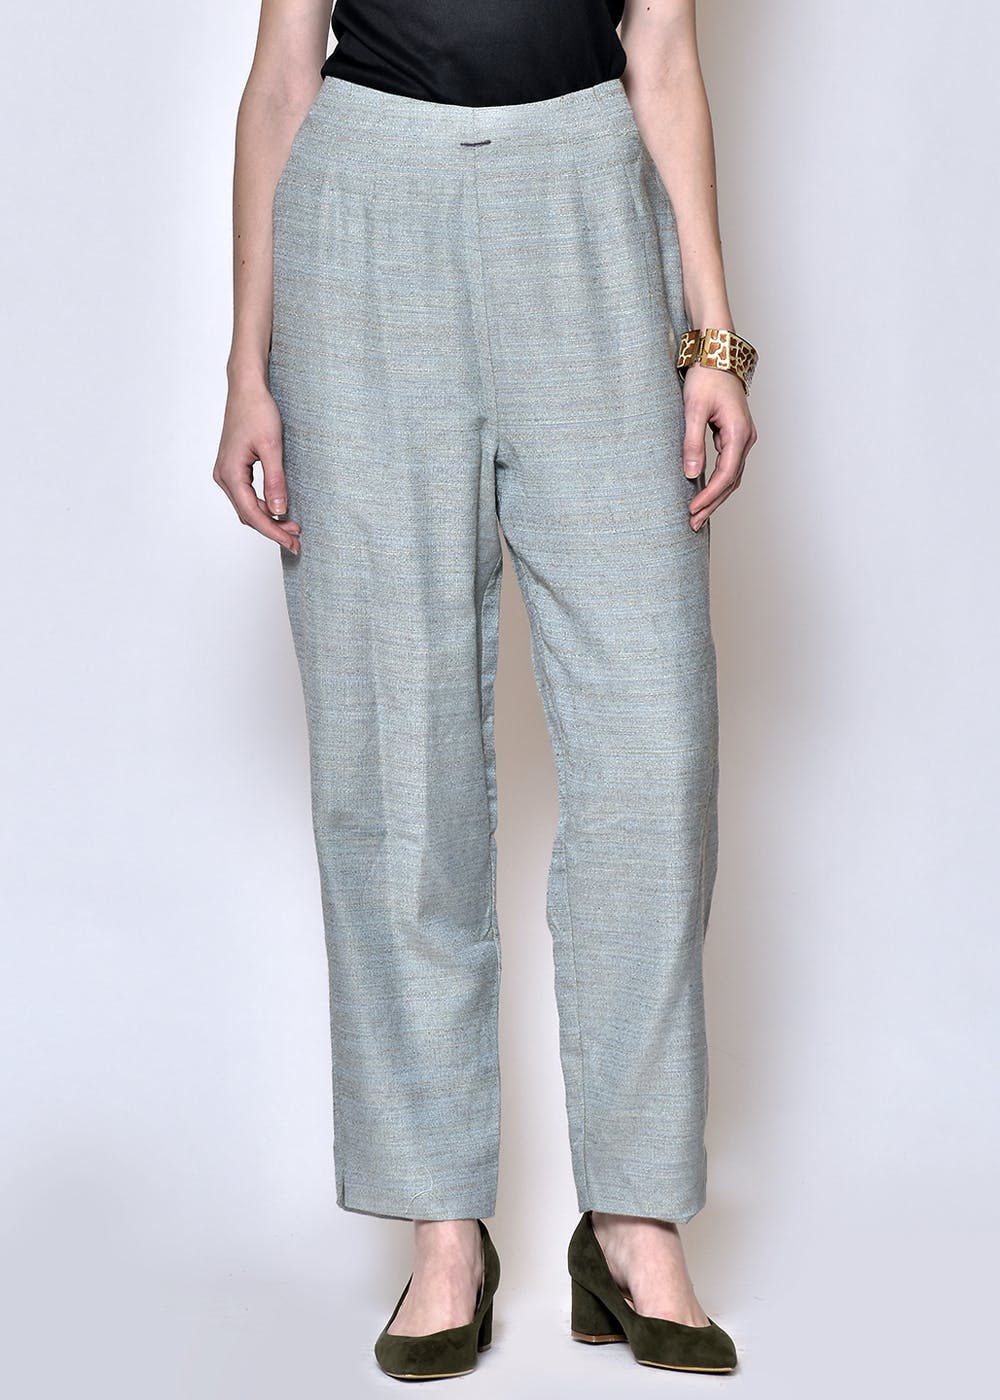 Get Self Textured Blue Linen Pants at ₹ 1499 | LBB Shop